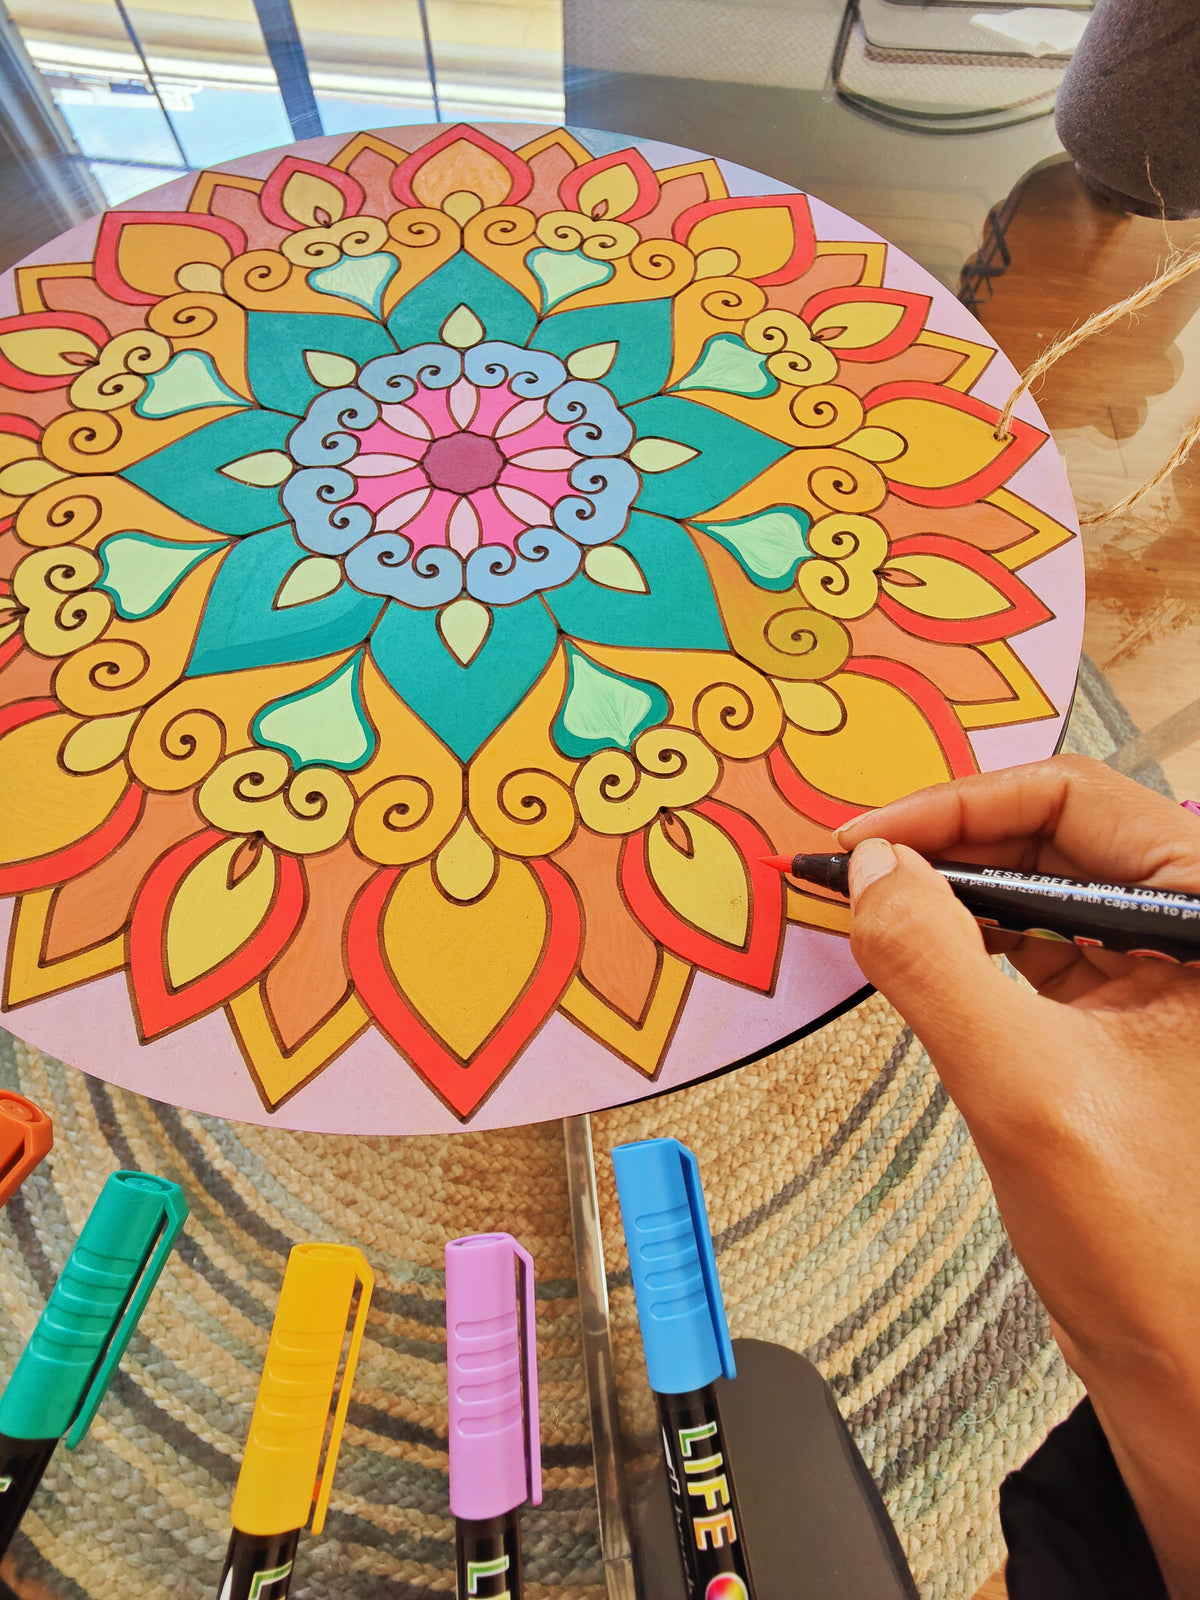 Life of Colour Mandala Painting Kit - The Phoenix (Florals)